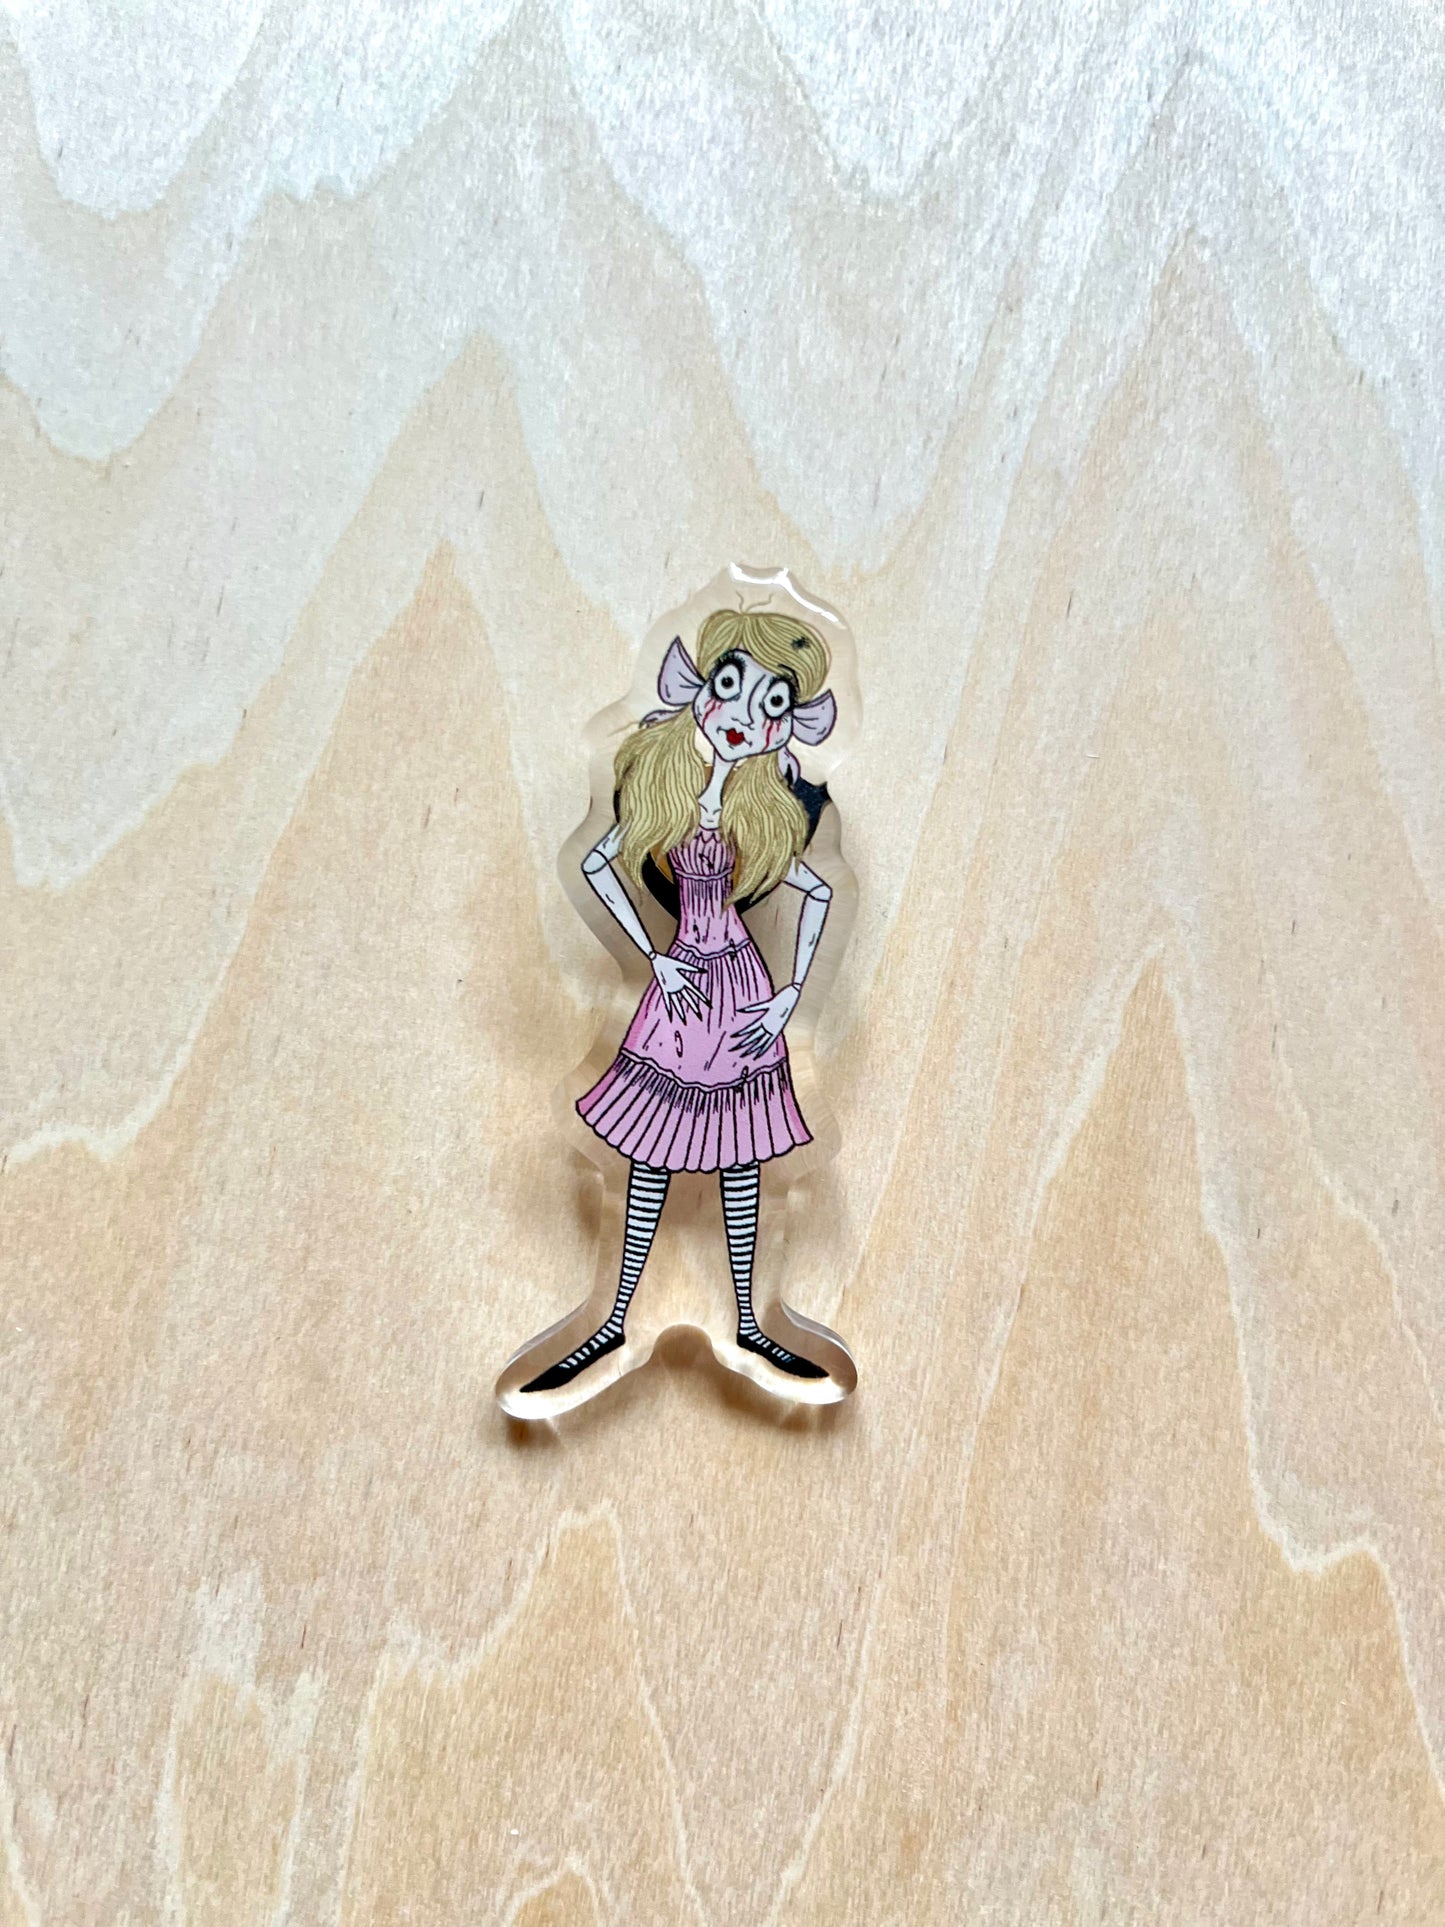 Creepy Horror Doll Art Pin